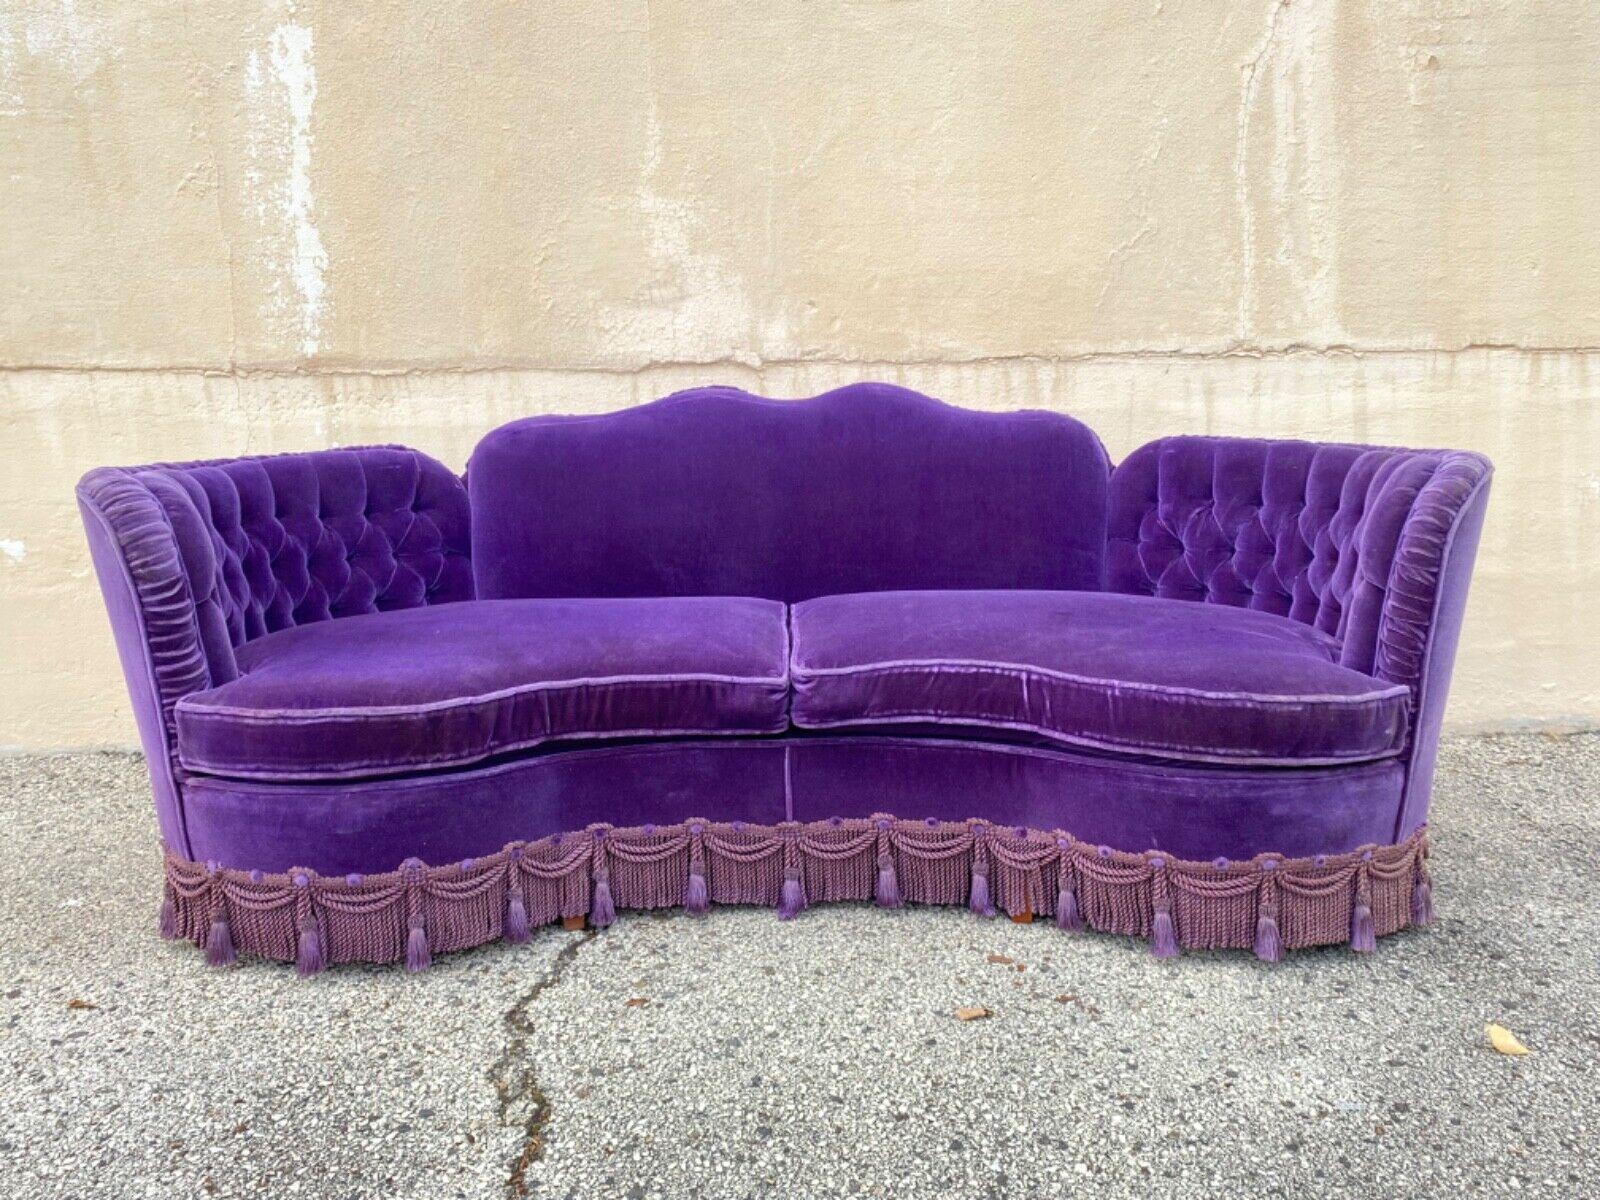 Vintage Hollywood Regency Custom Purple Mohair Serpentine Tassel Skirted Sofa. Original vintage custom made design, purple mohair fabric, shapely serpentine frame, tassel skirt all the way around, wooden legs, pleated and button tufted upholstery,